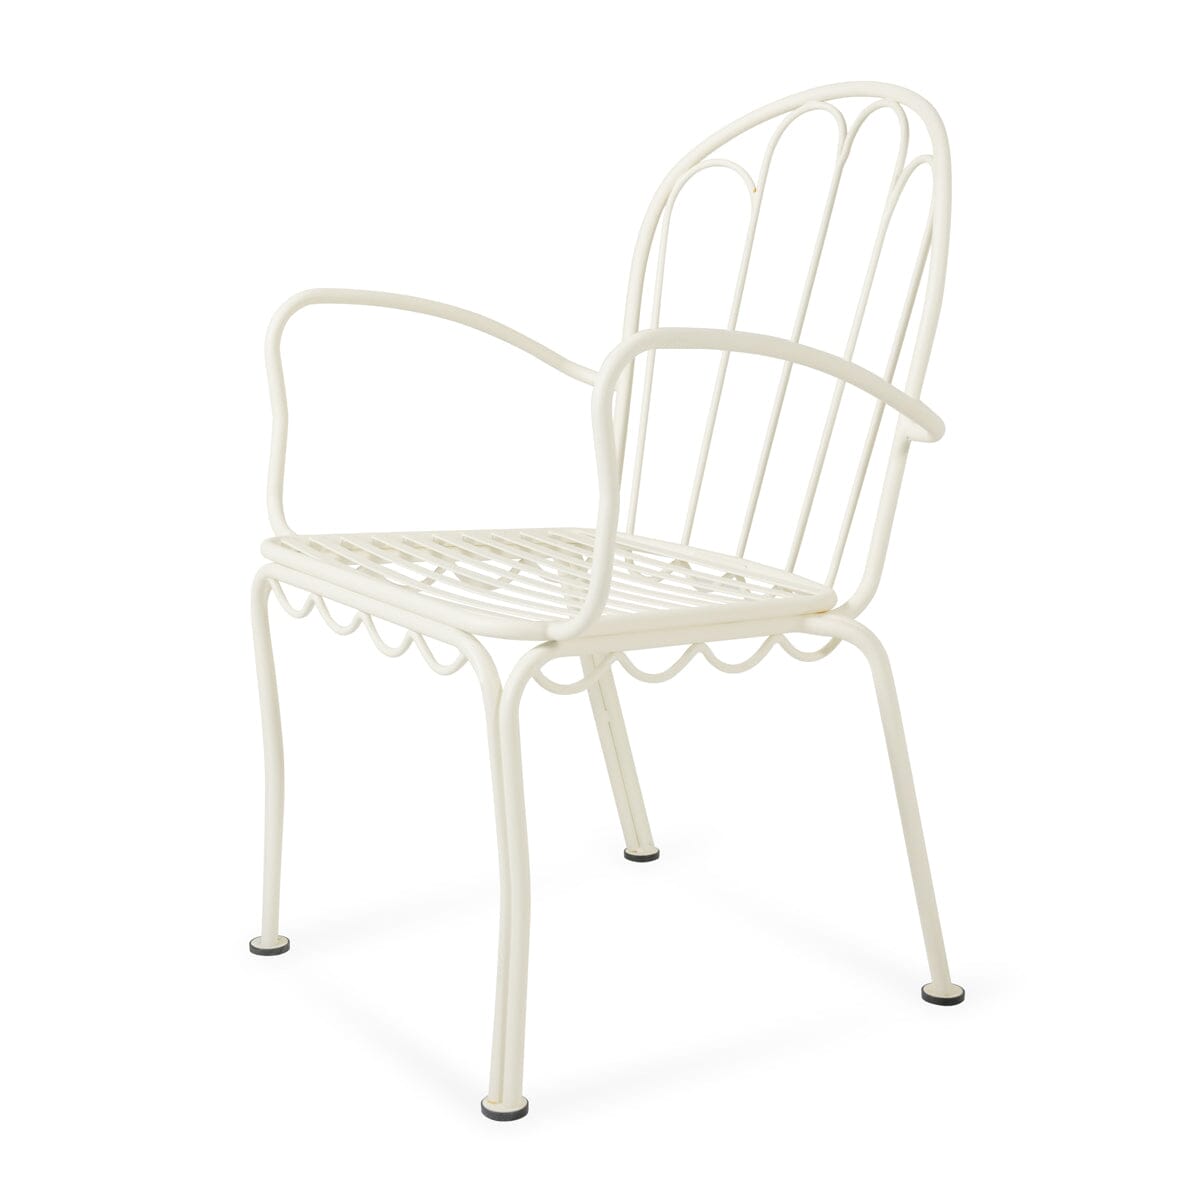 The Al Fresco Dining Chair - Antique White Al Fresco Dining Chair Business & Pleasure Co 